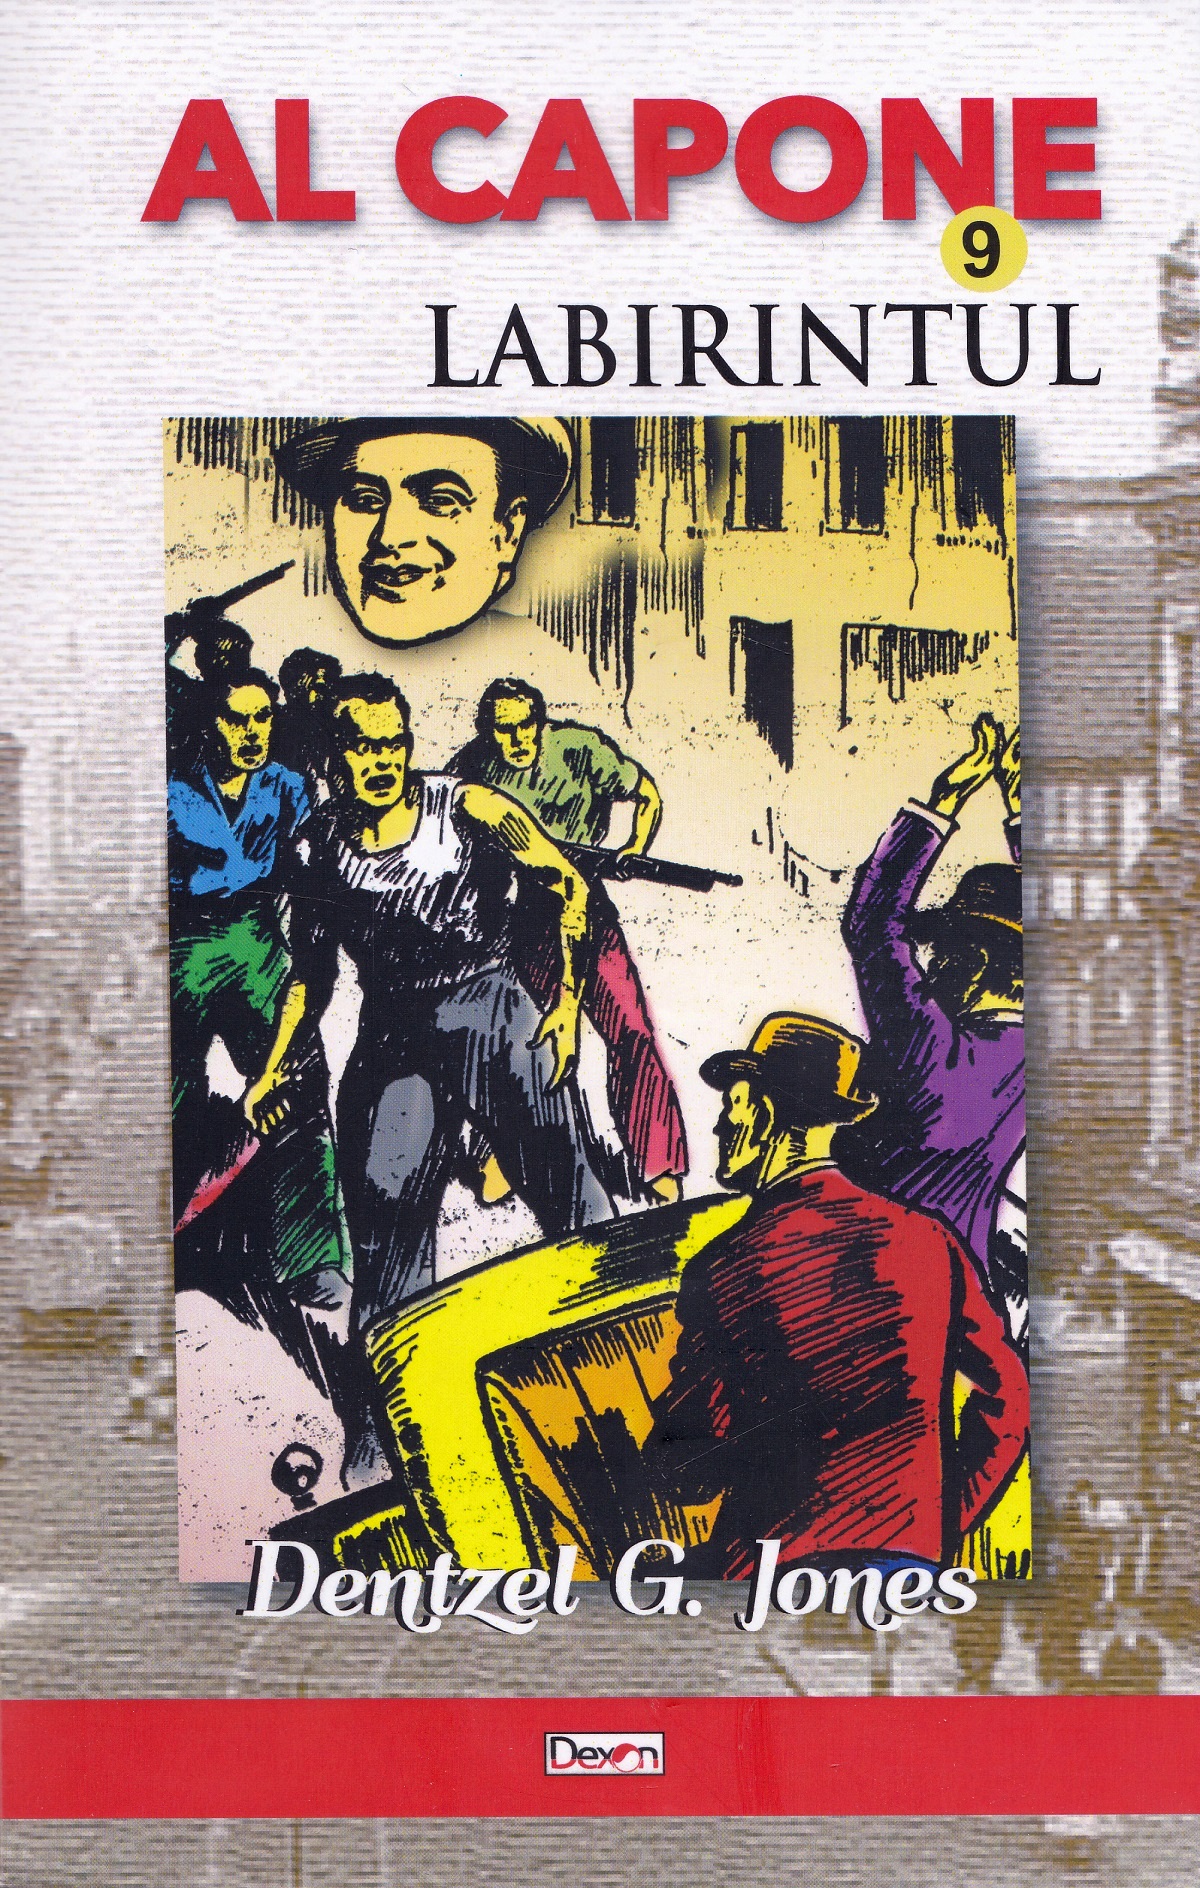 Al Capone vol.9: Labirintul - Dentzel G. Jones